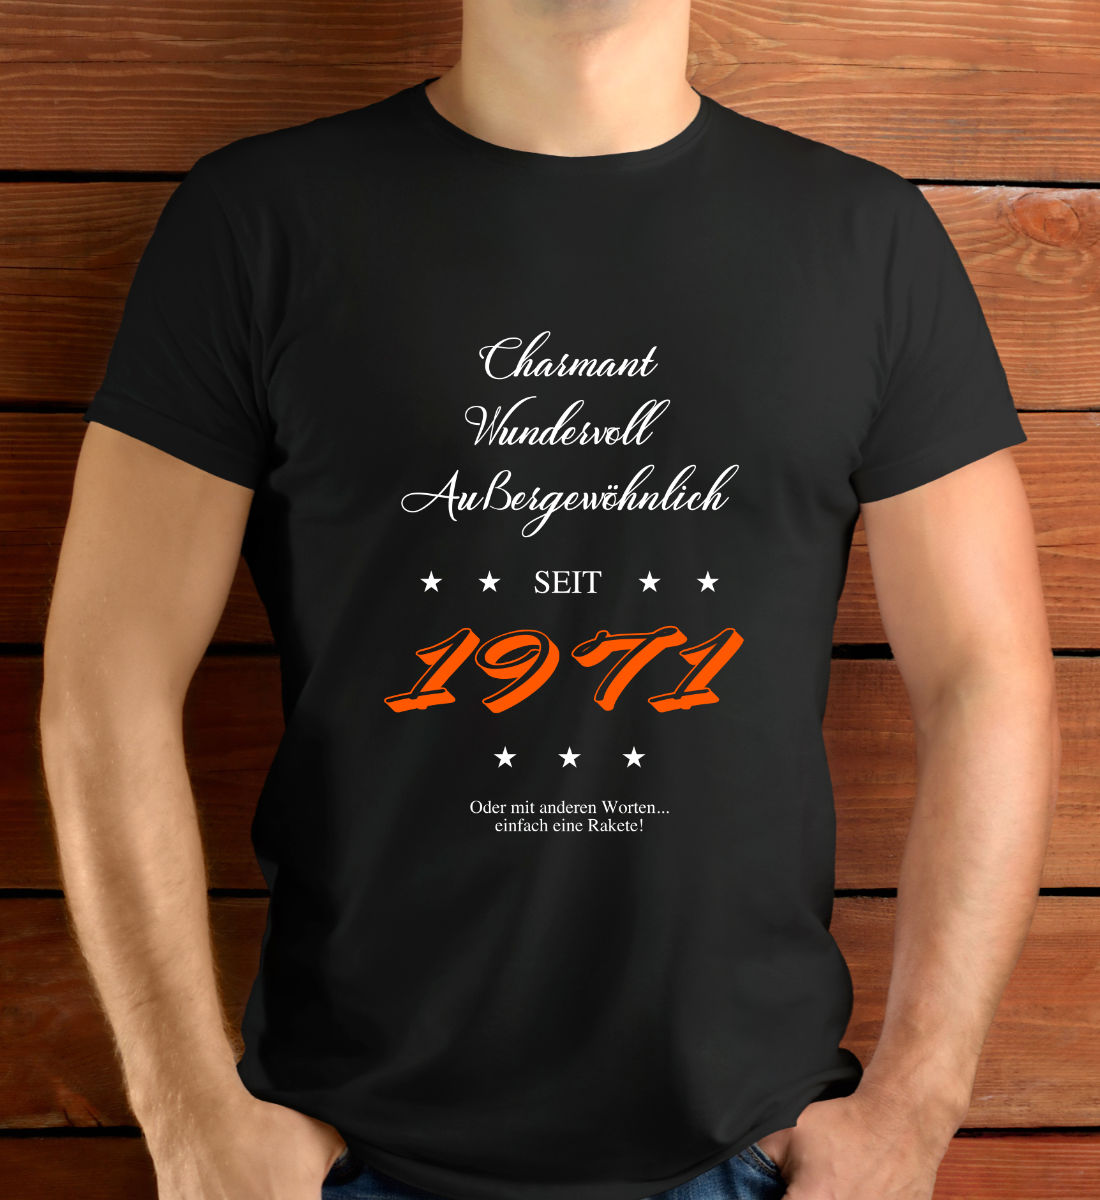 T-Shirt-zum-50-Geburtstag - Charmant-Wundervoll 1971